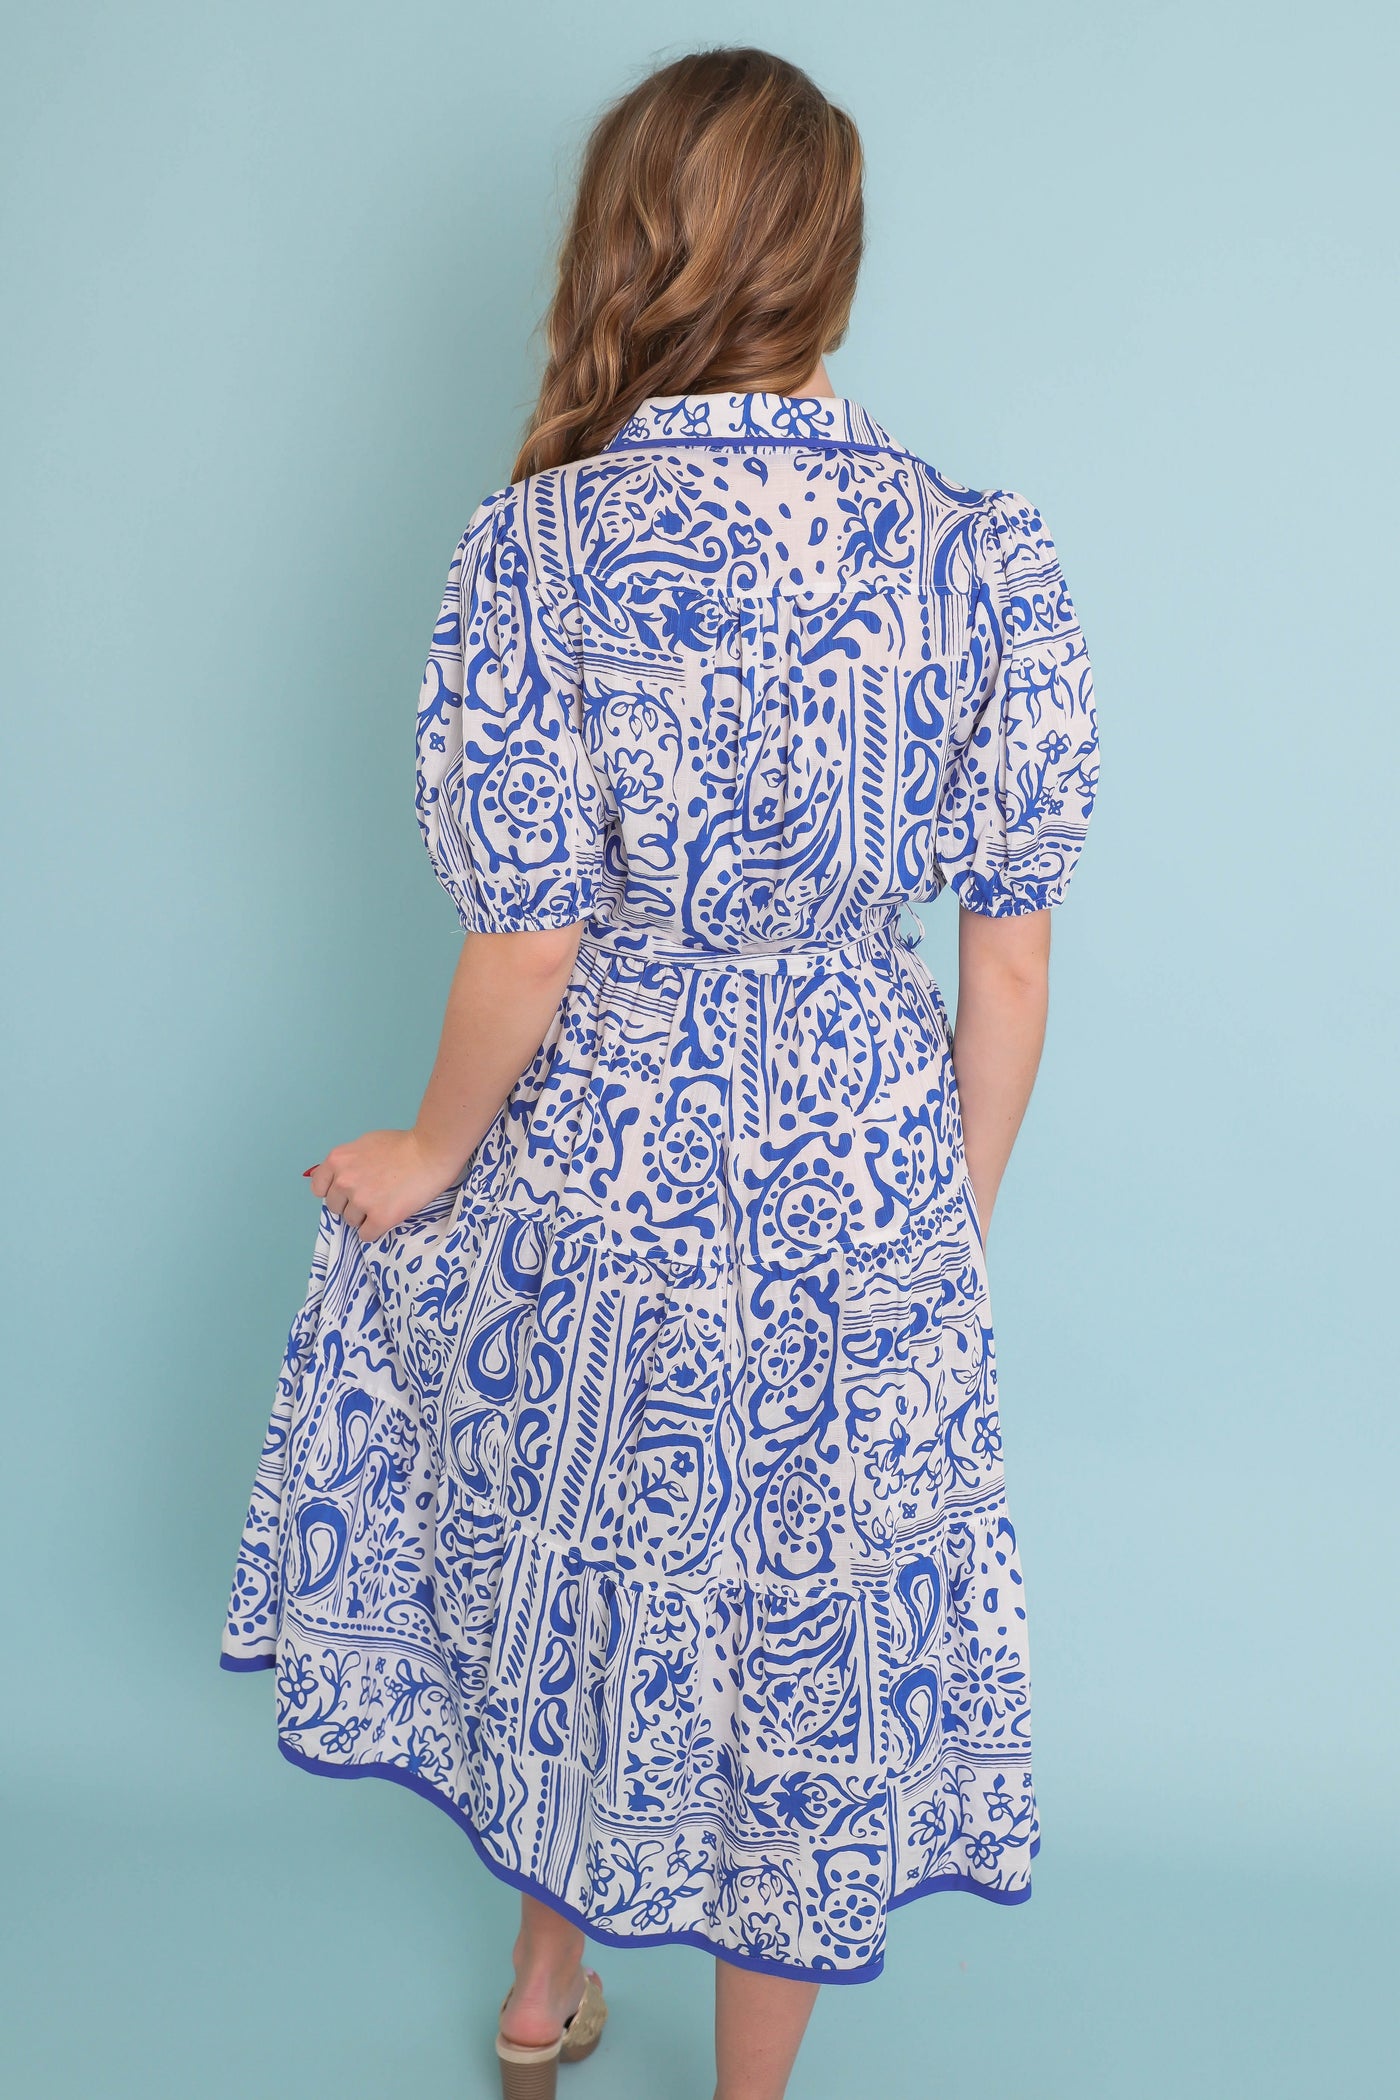 Blue And White Print Dress- Coastal Grandmother Dress- Europe Travel Dresses